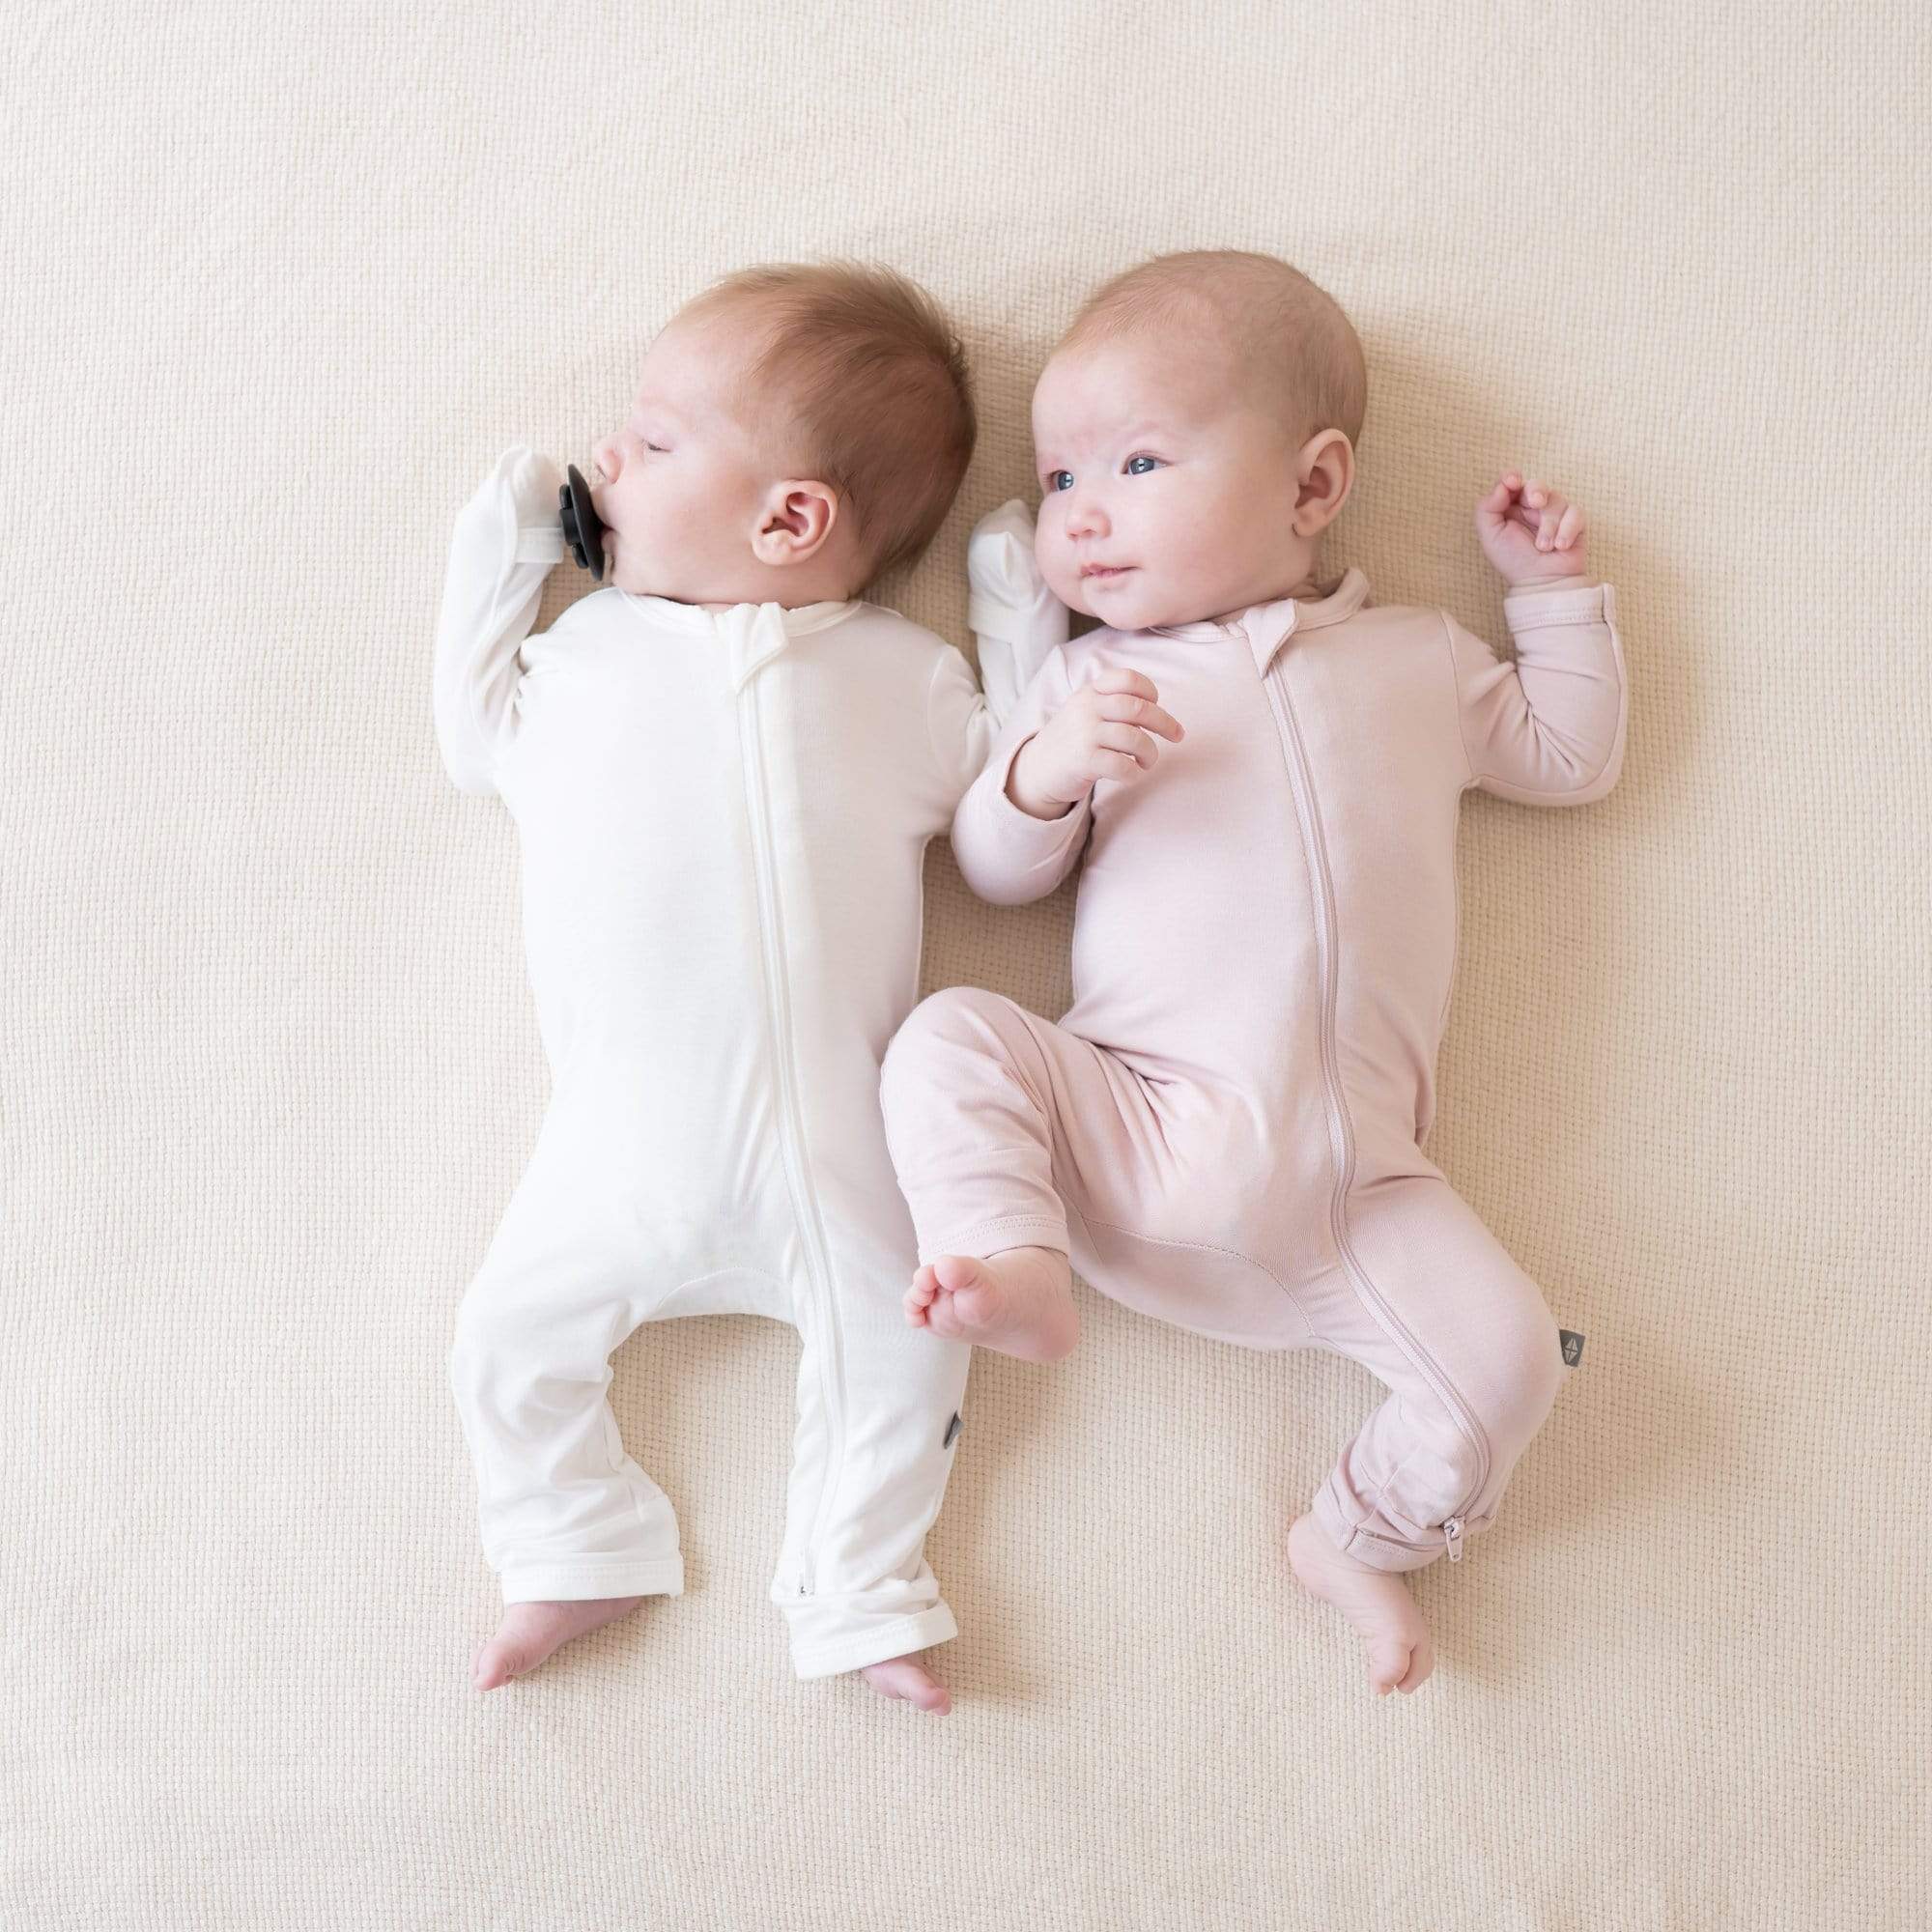 Babies wearing Kyte Baby bamboo Zippered Romper pajamas